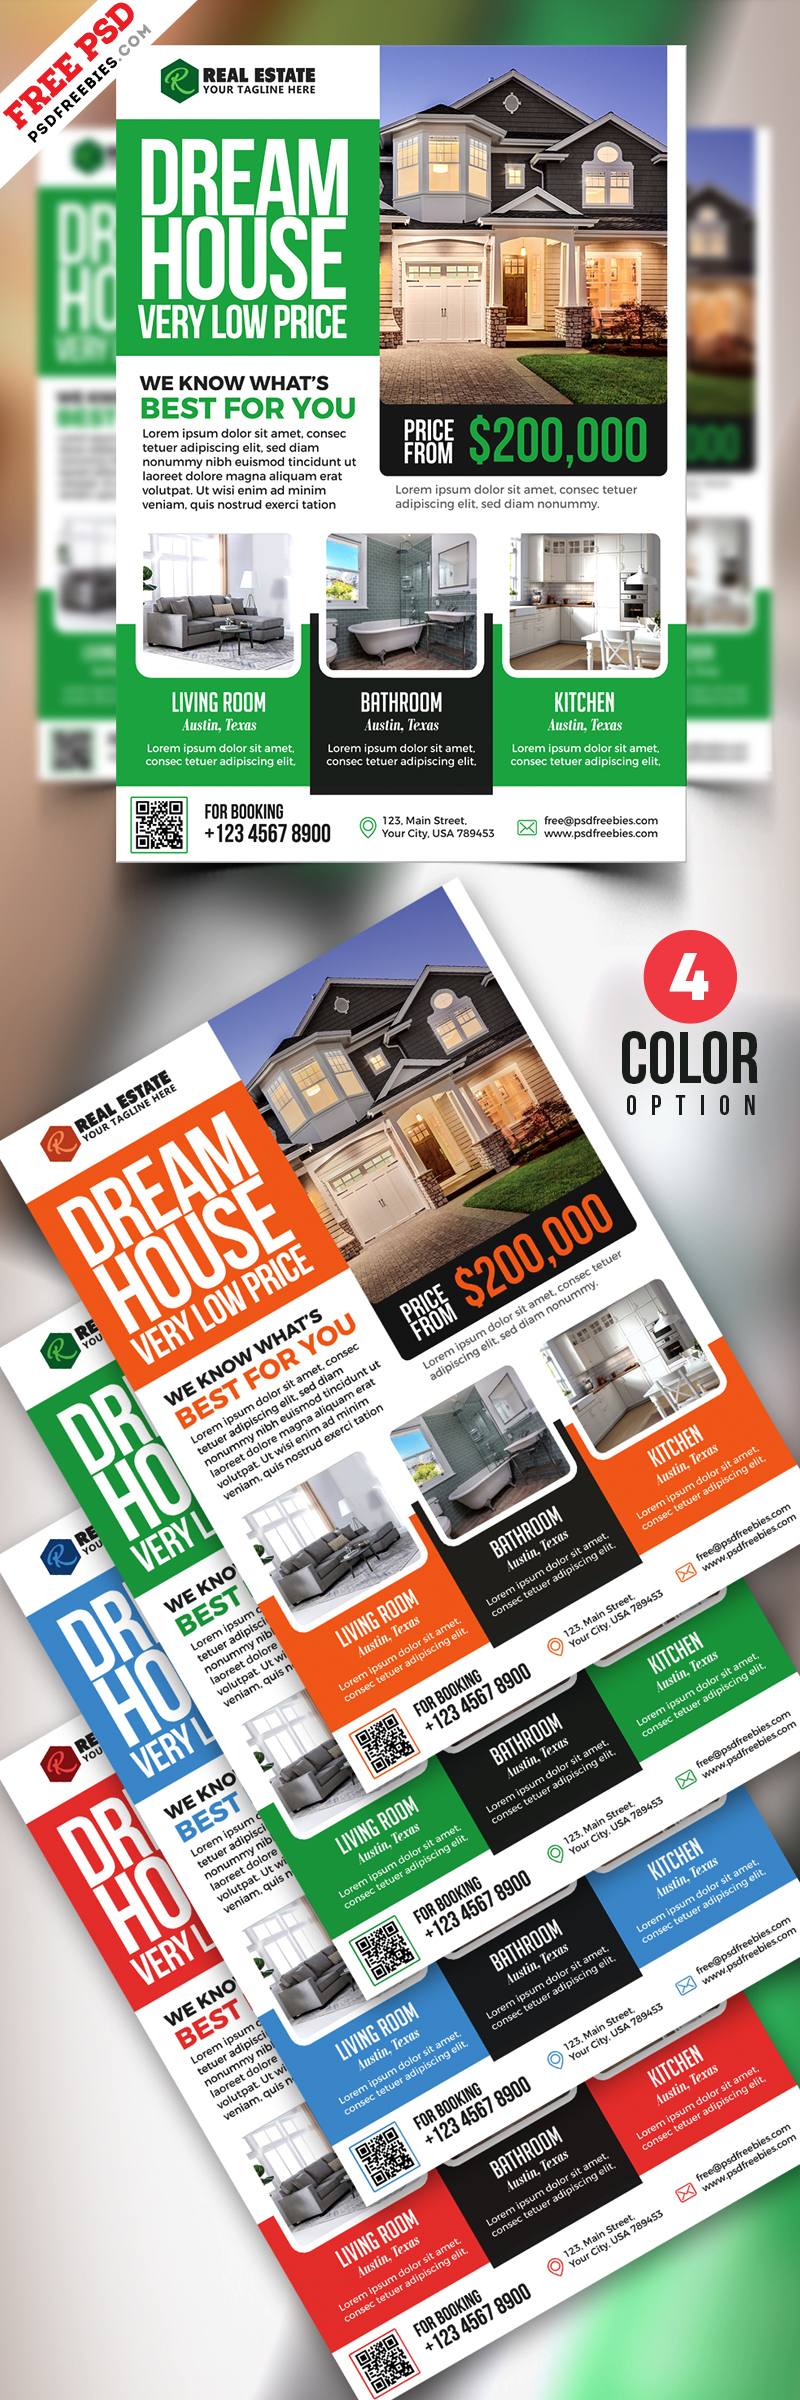 PSD Real Estate Flyer Templates – PSDFreebies.com Regarding Real Estate Brochure Templates Psd Free Download